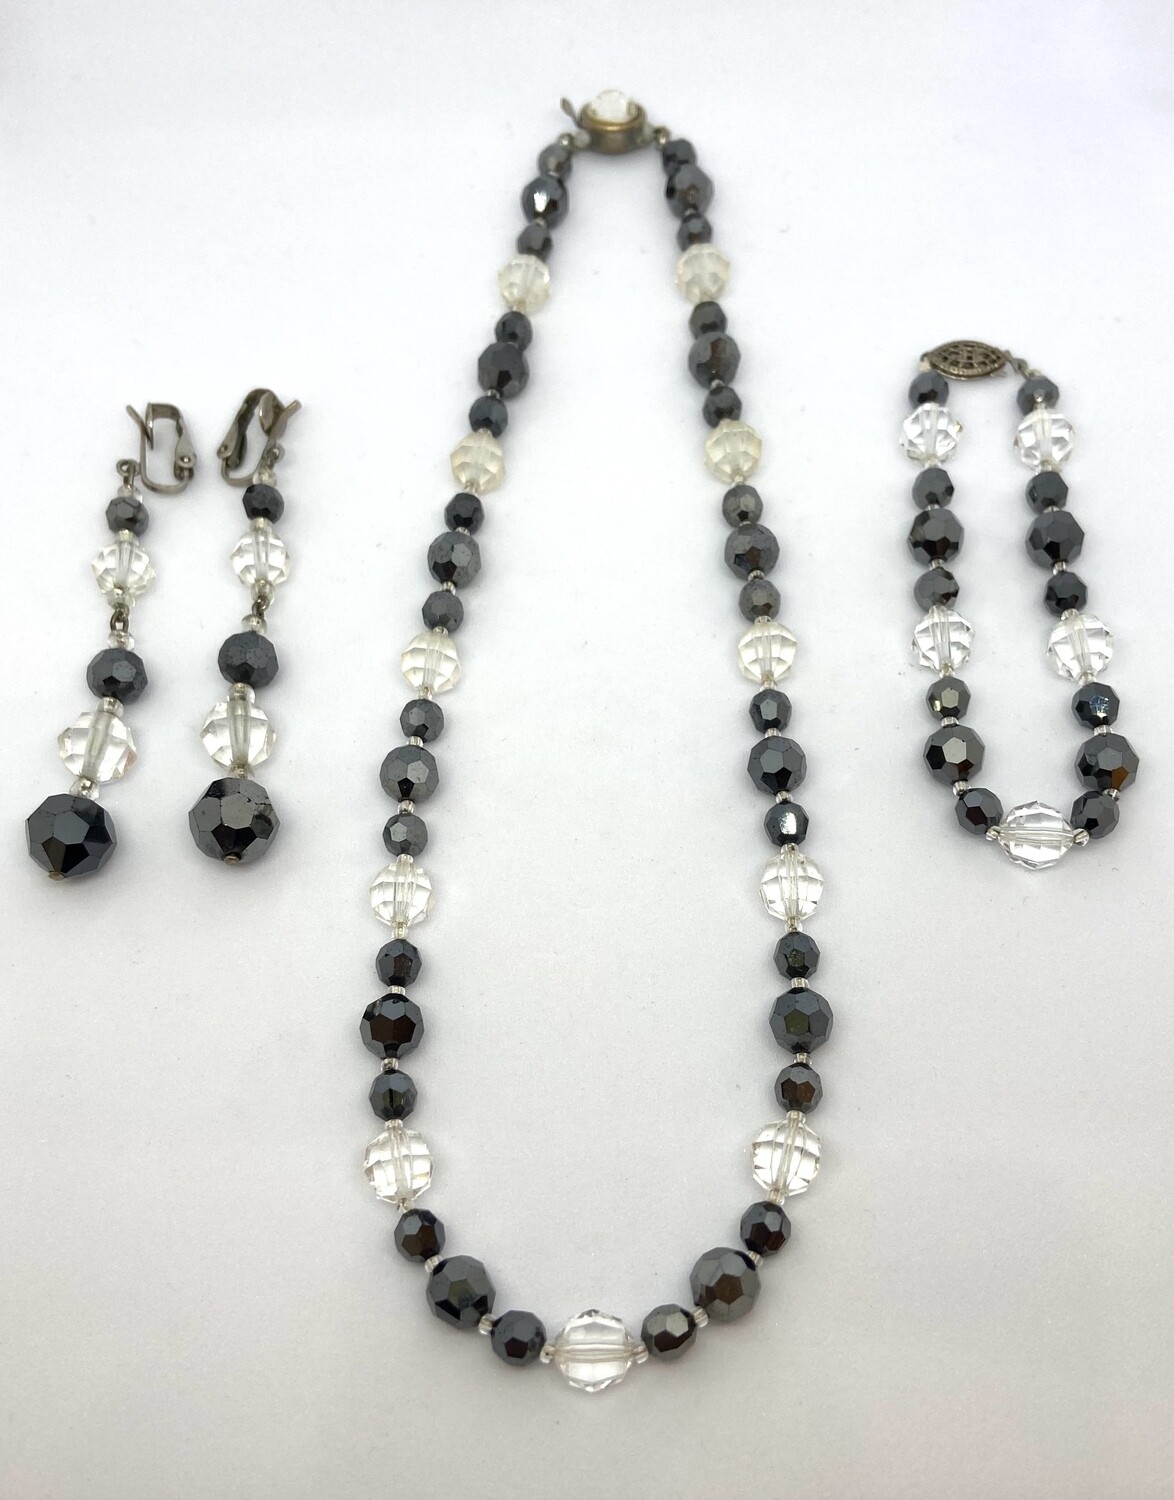 Vintage Black and Clear Bead Necklace, Earring, Bracelet Set